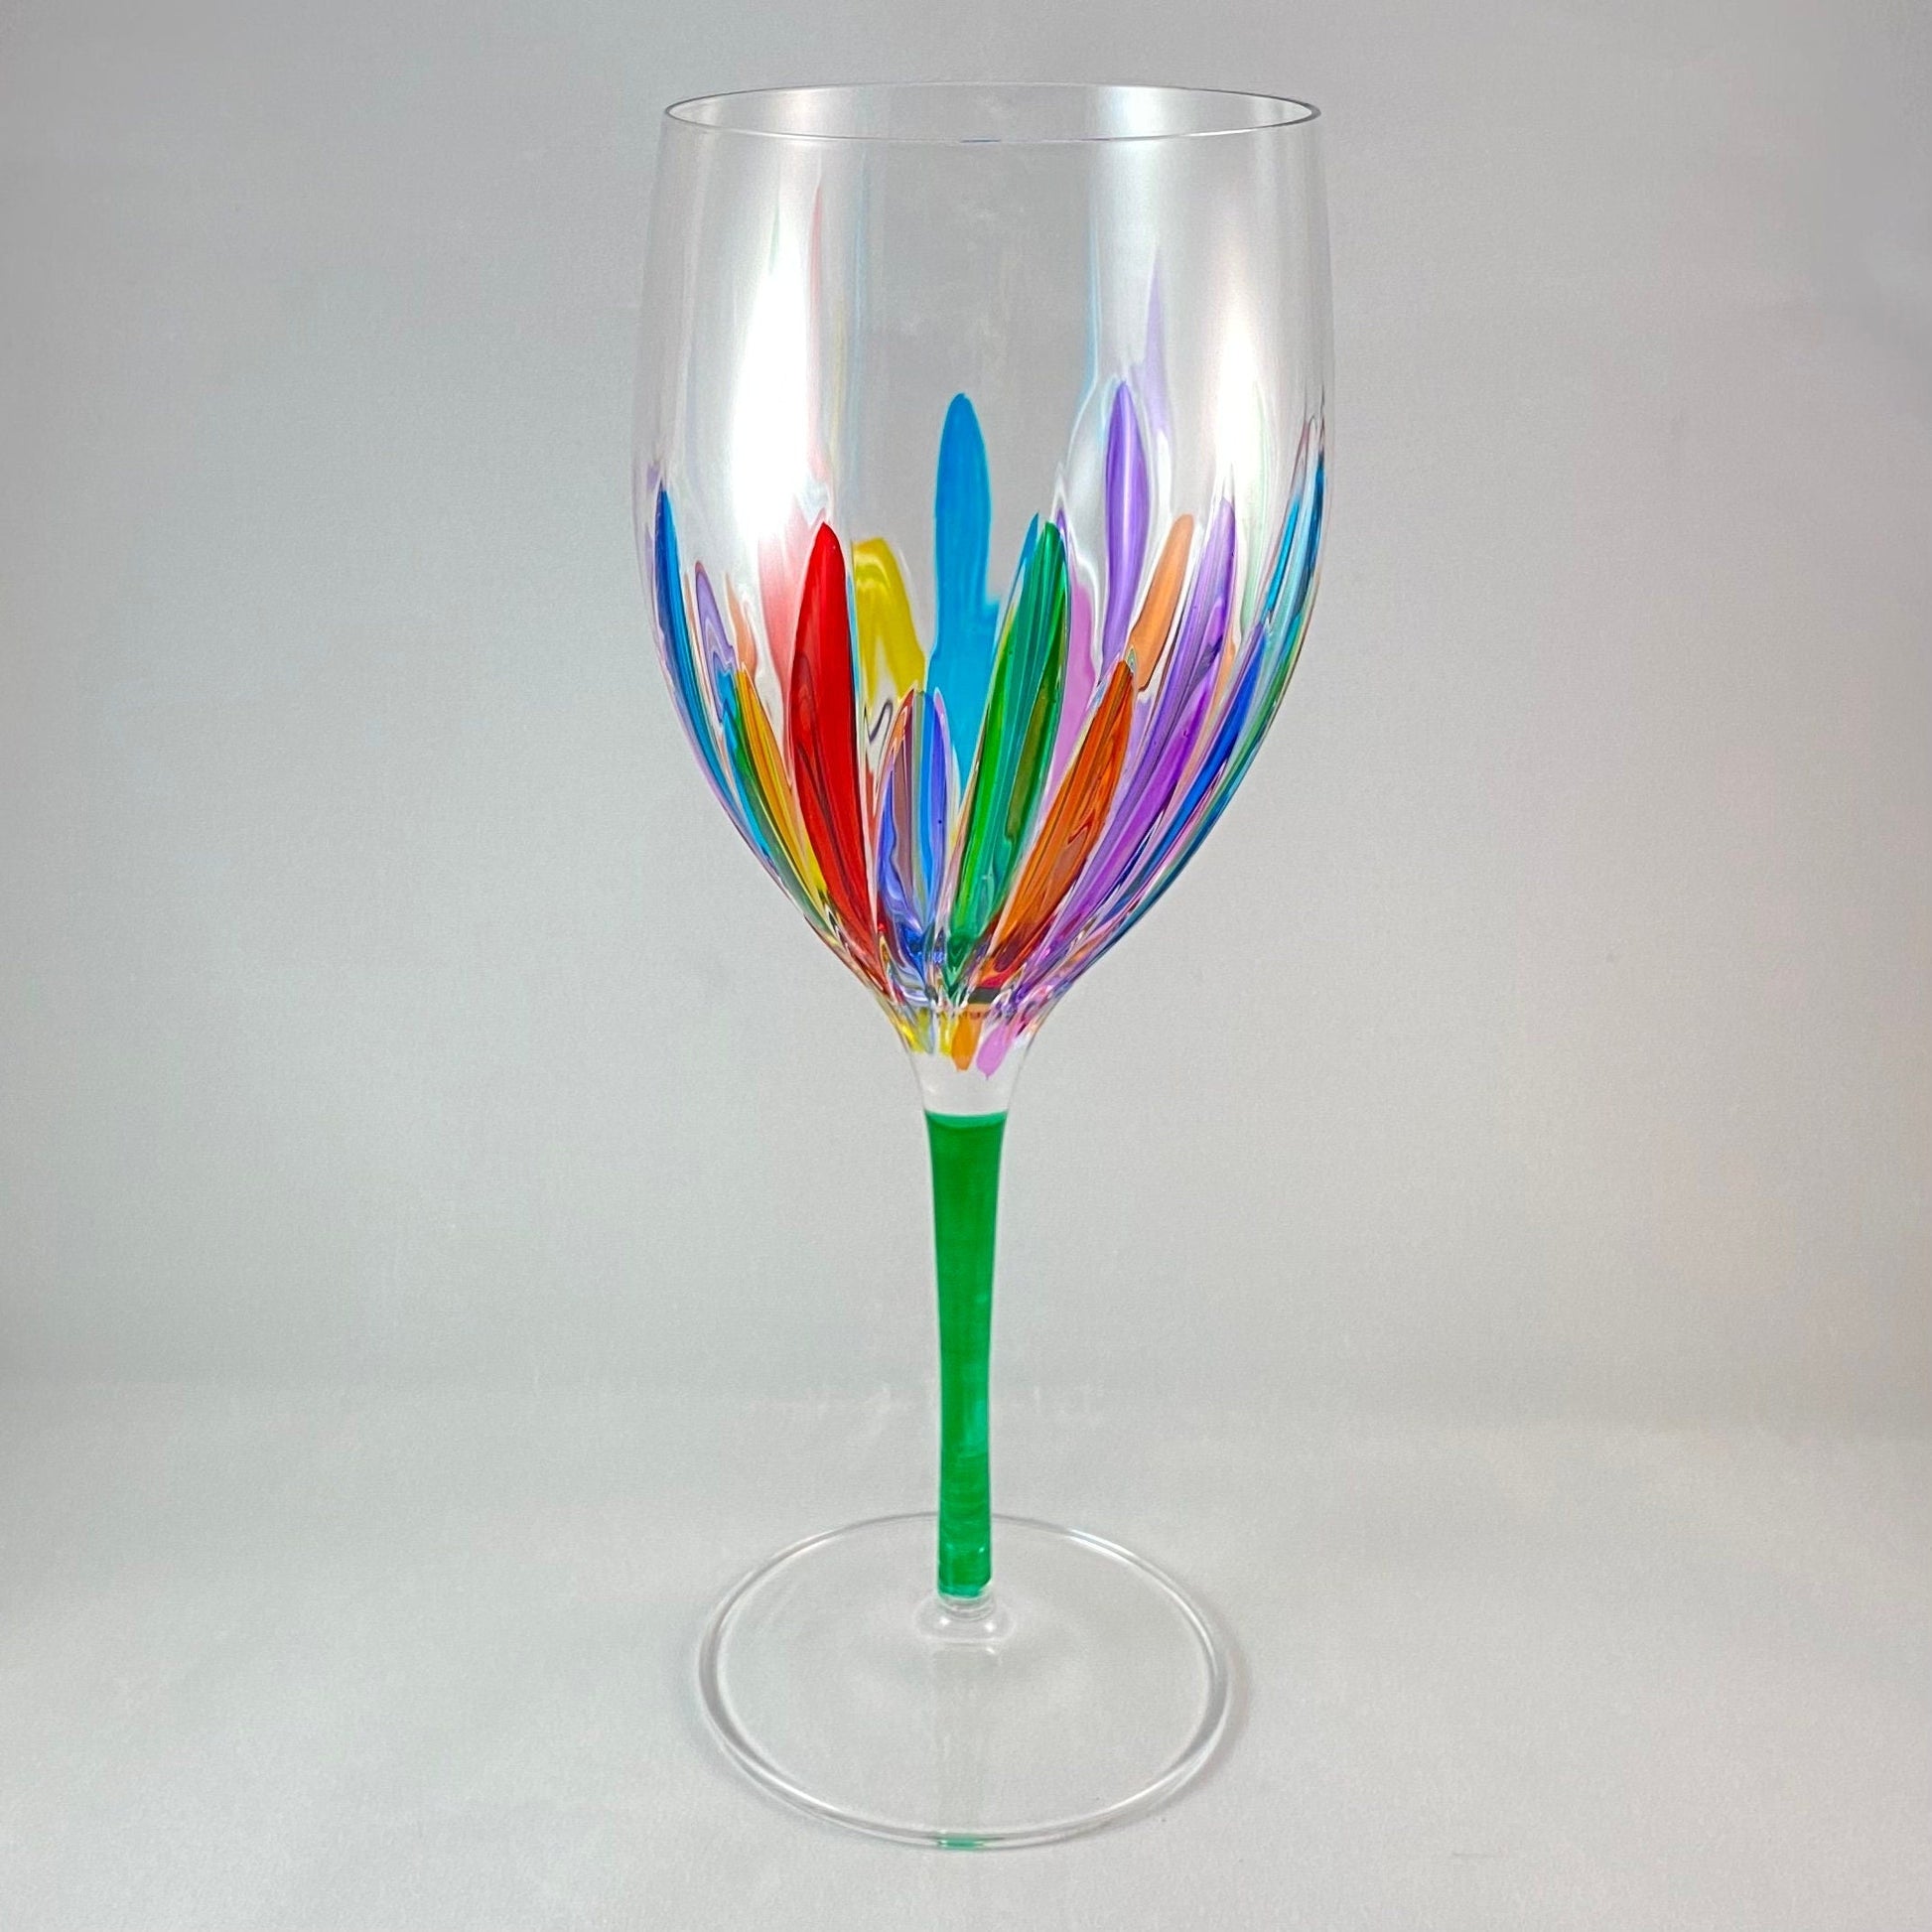 Green Stem Incanto Venetian Glass Wine Glass - Handmade in Italy, Colorful Murano Glass